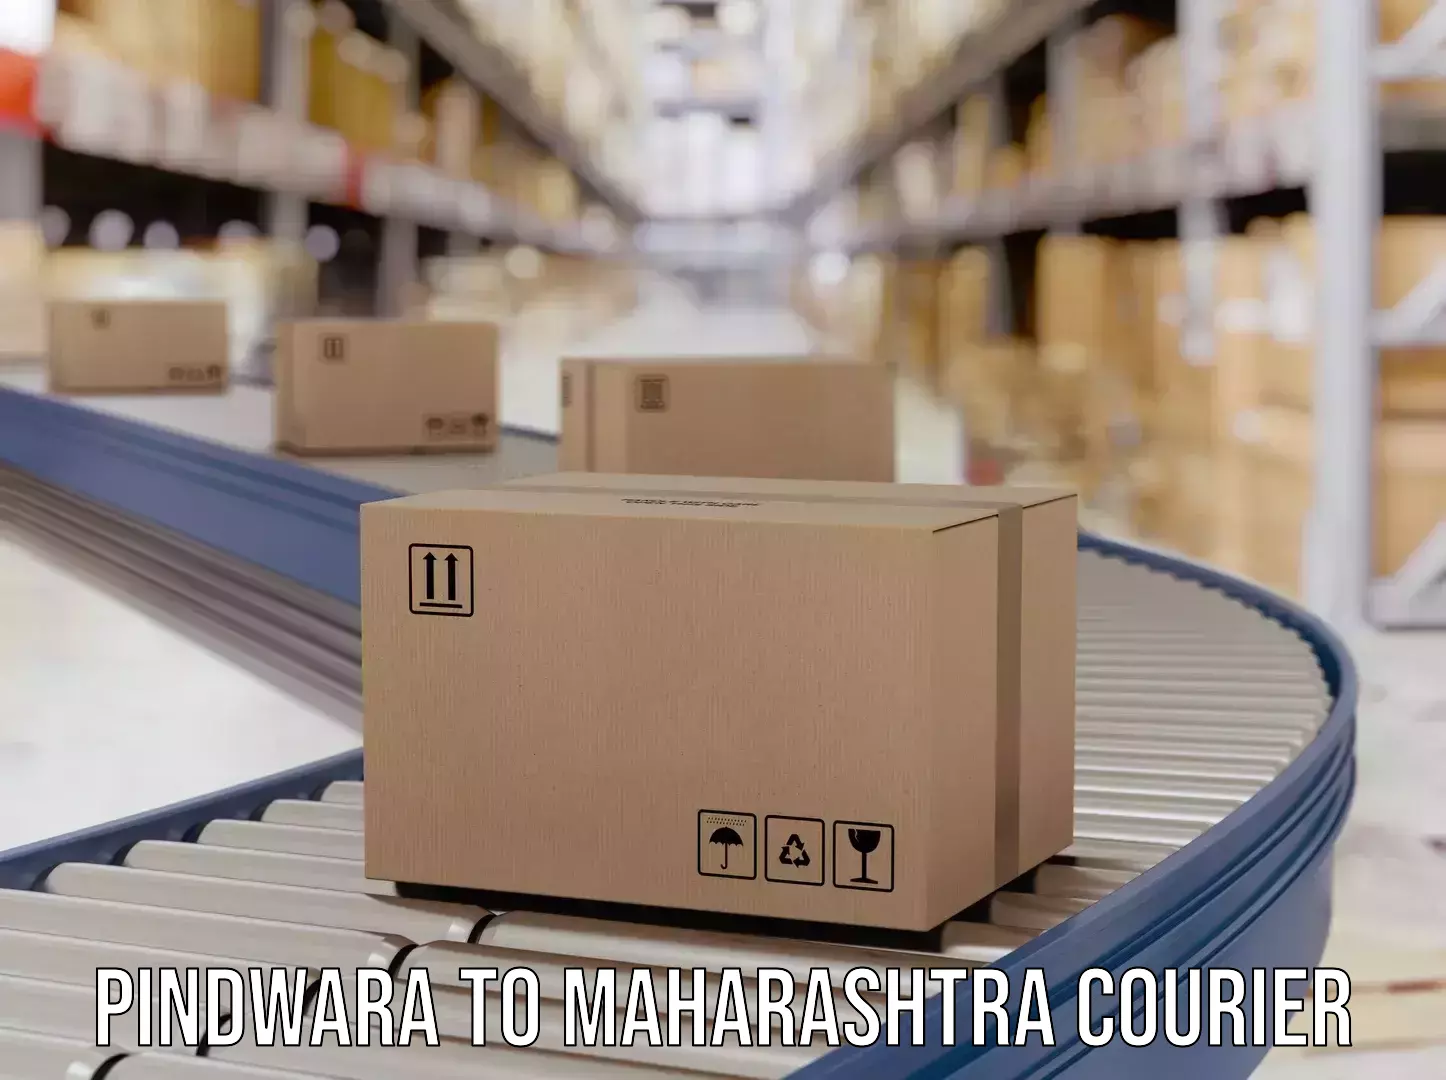 Express delivery capabilities Pindwara to Maharashtra